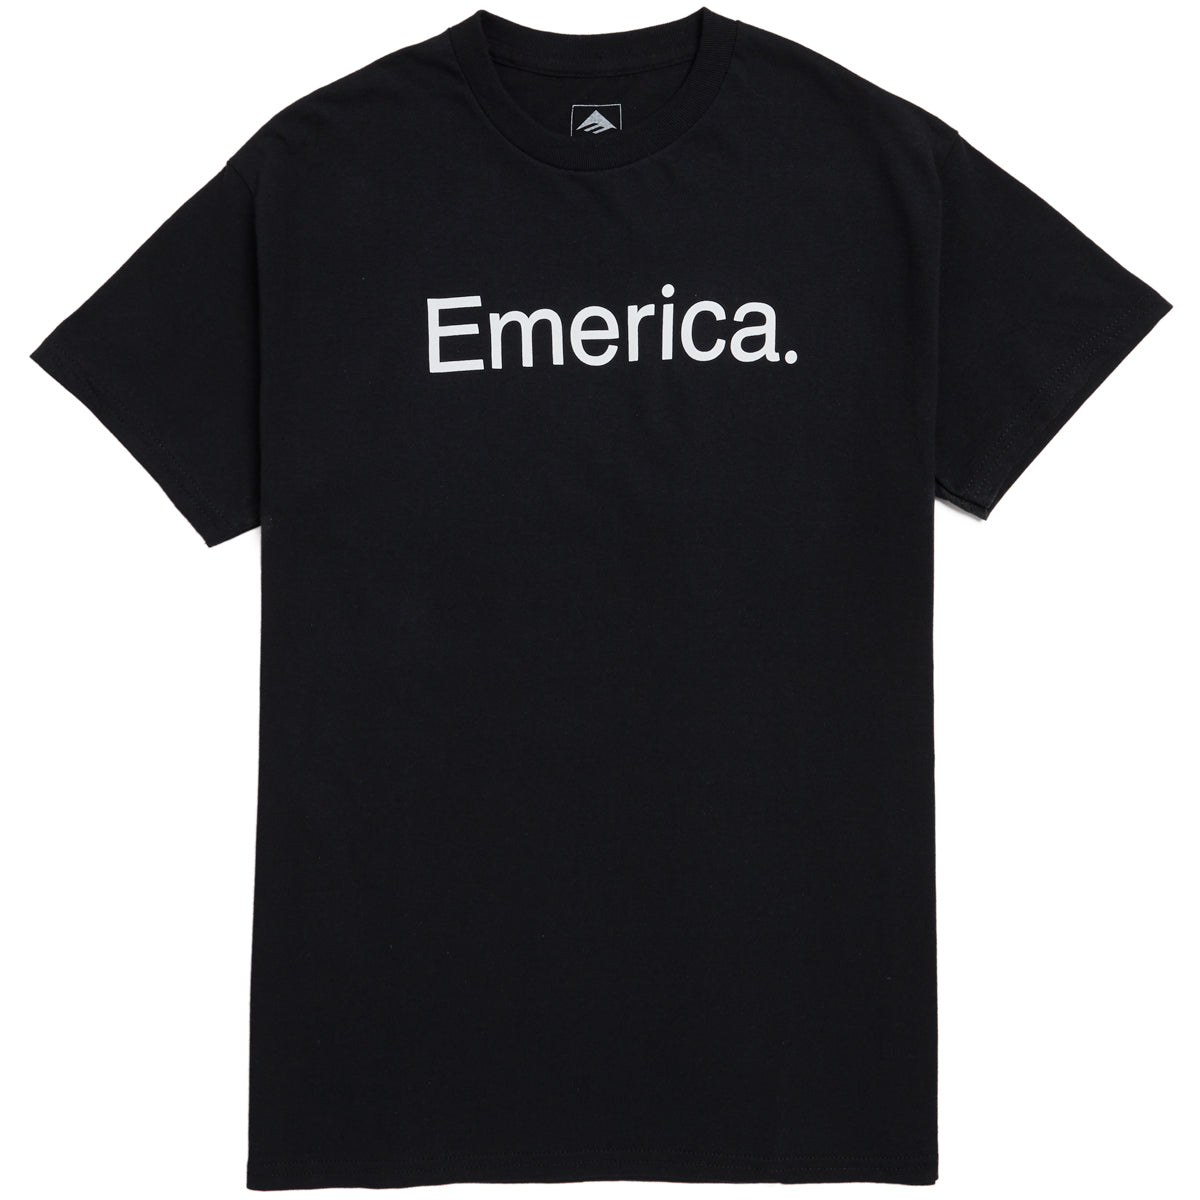 Emerica Pure T-Shirt - Black/Black image 1